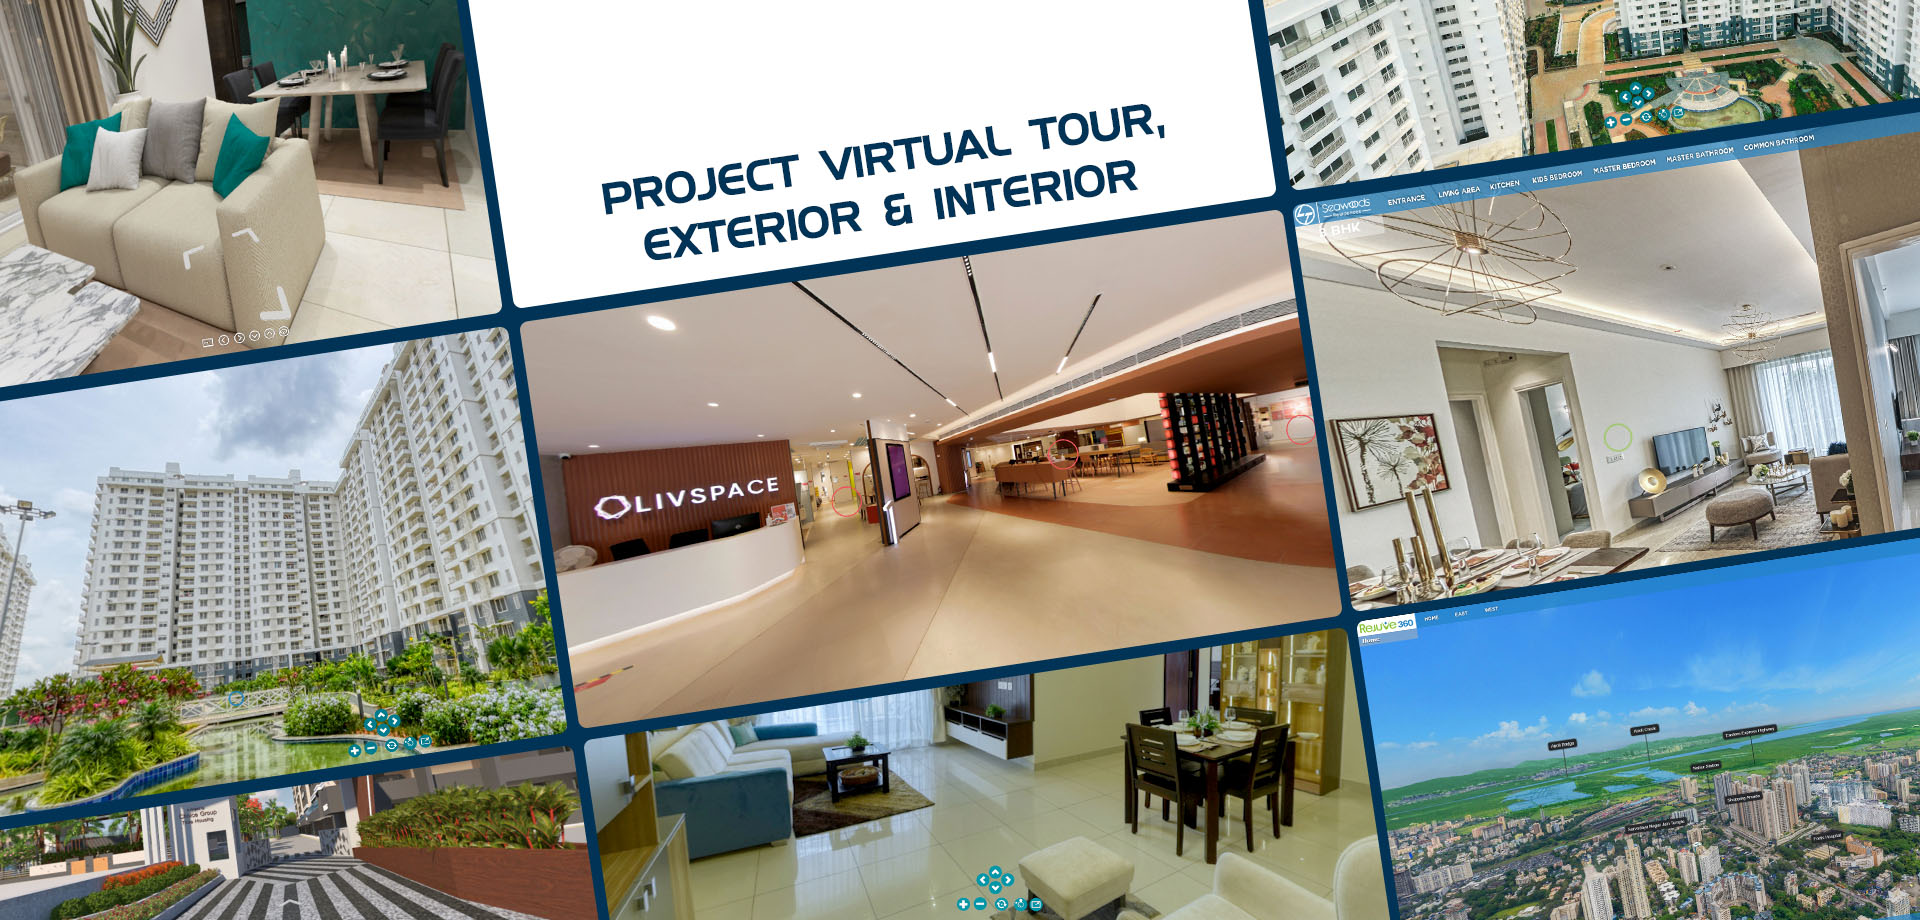 Real Estate Show Project Virtual Tour Aerial, Interior & Exterior